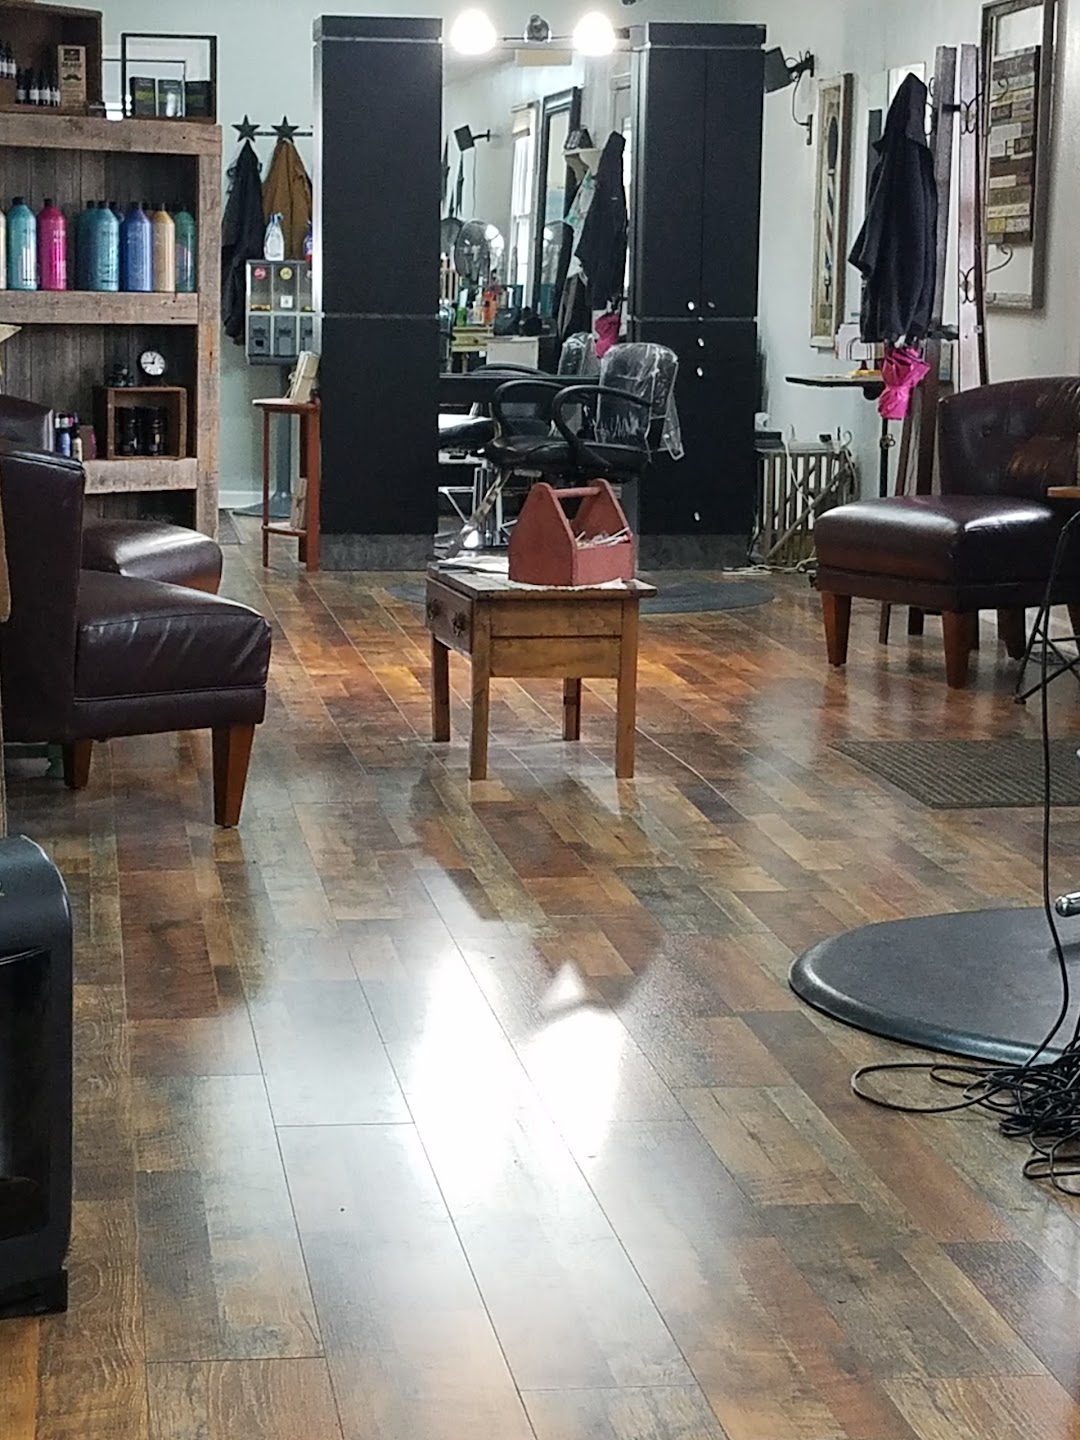 5 Star Salon & Barbershop